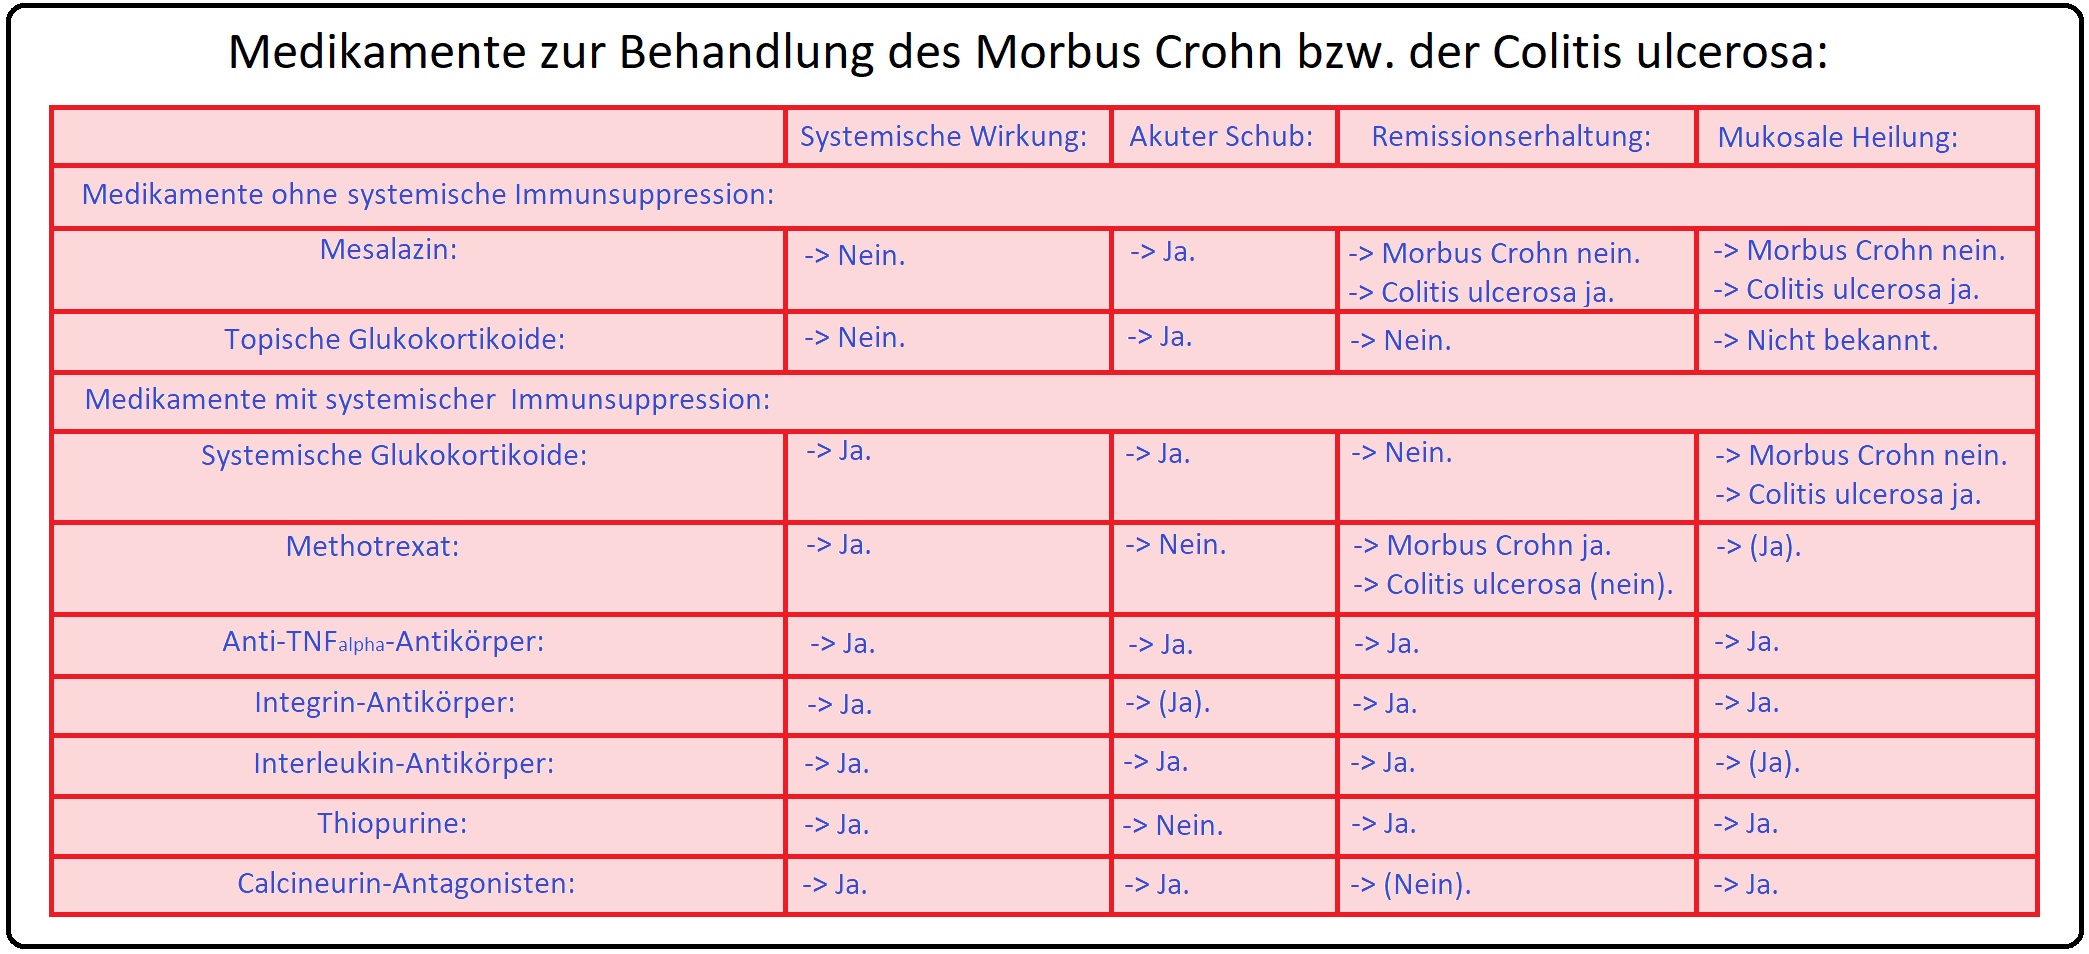 1203 Medikamente zur Behandlung des Morbus Crohn bzw. der Colitis ulcerosa